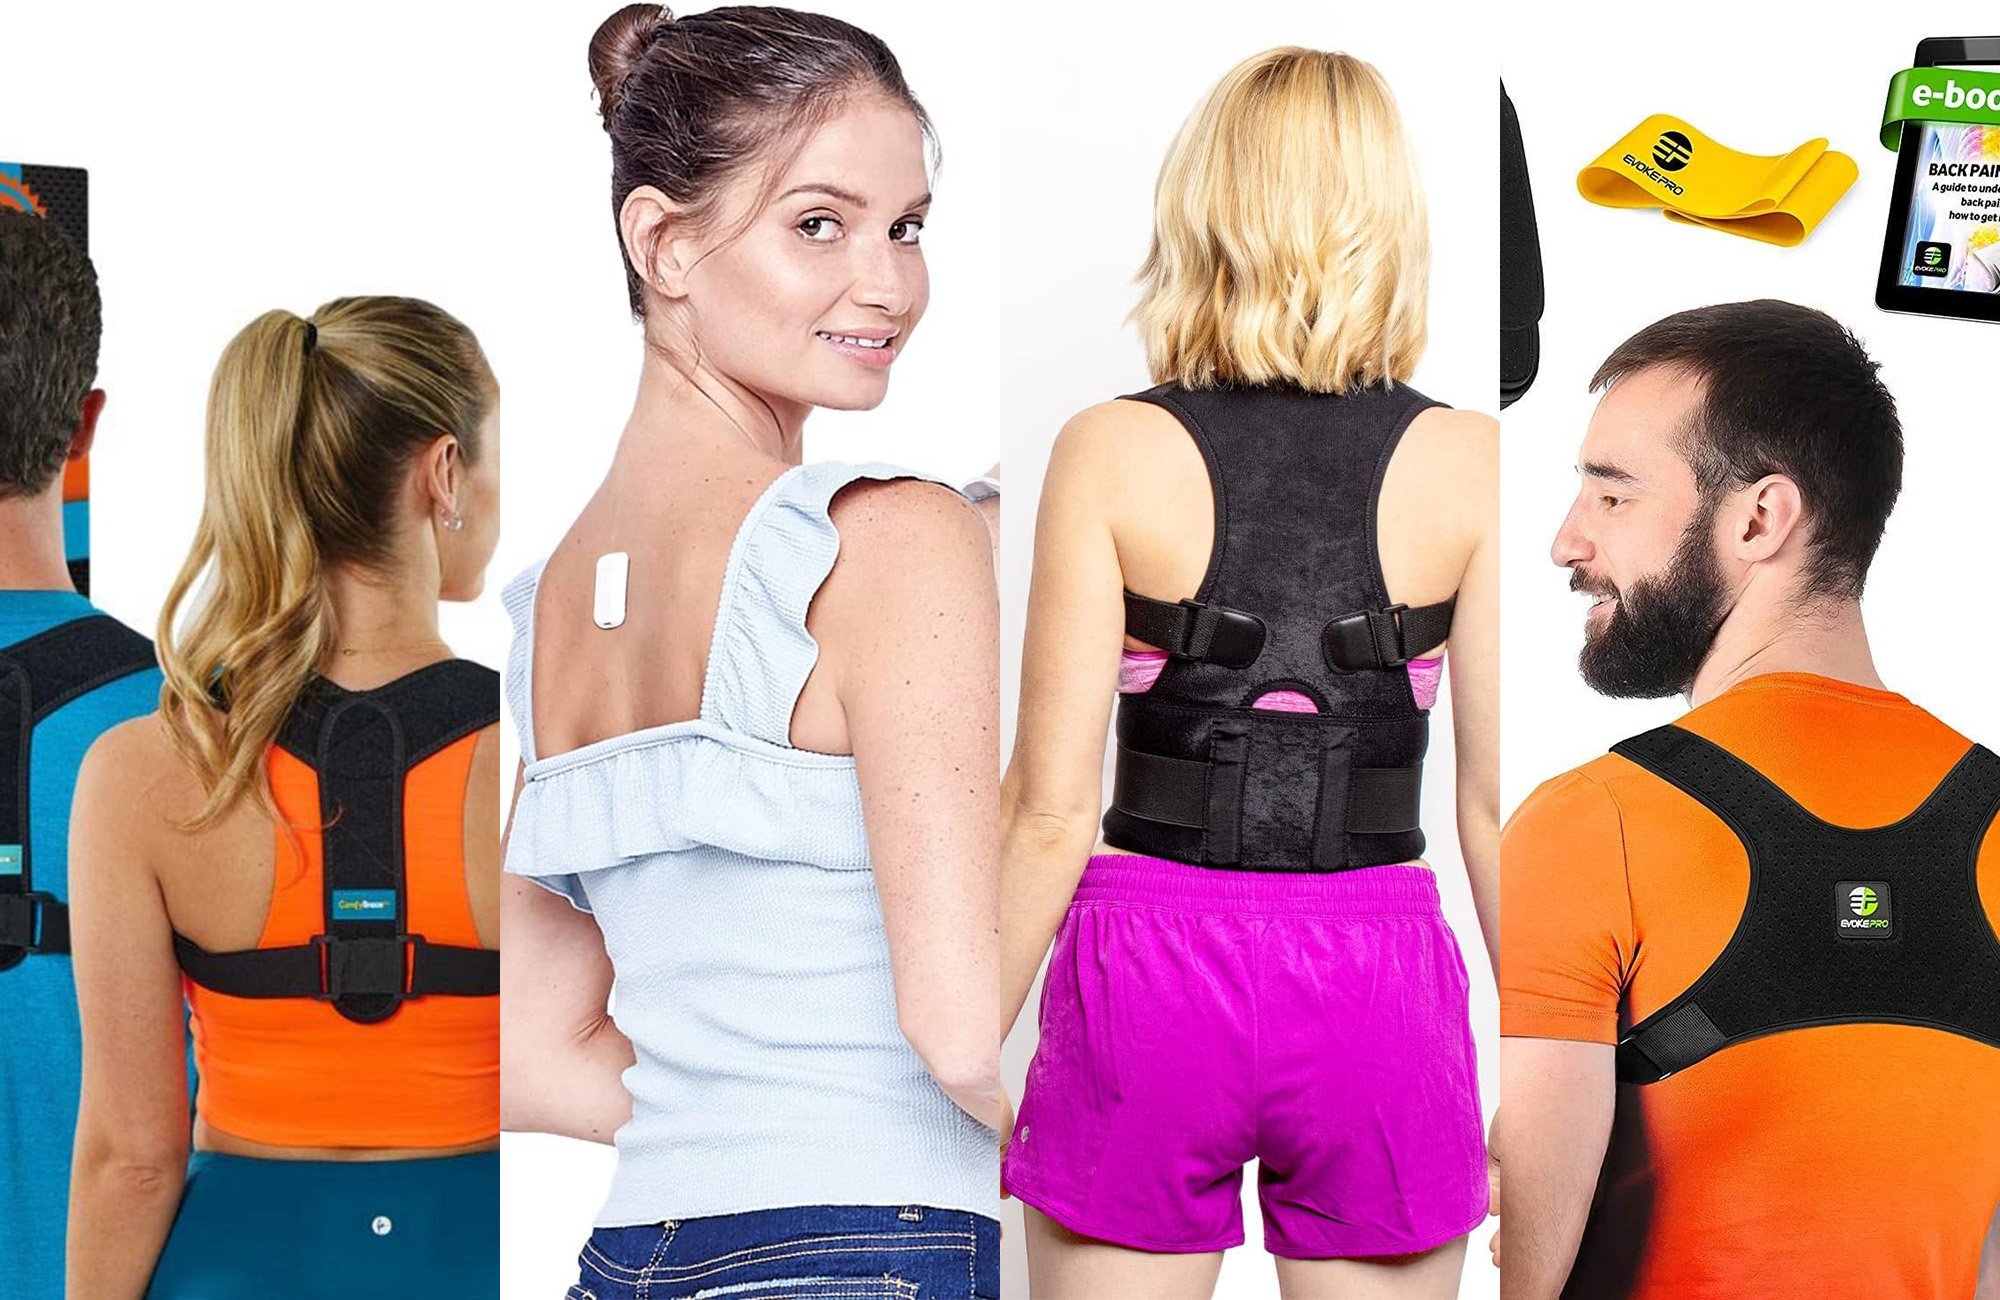 8 Best Posture Correctors for Back Relief in 2020: Braces, Gadgets